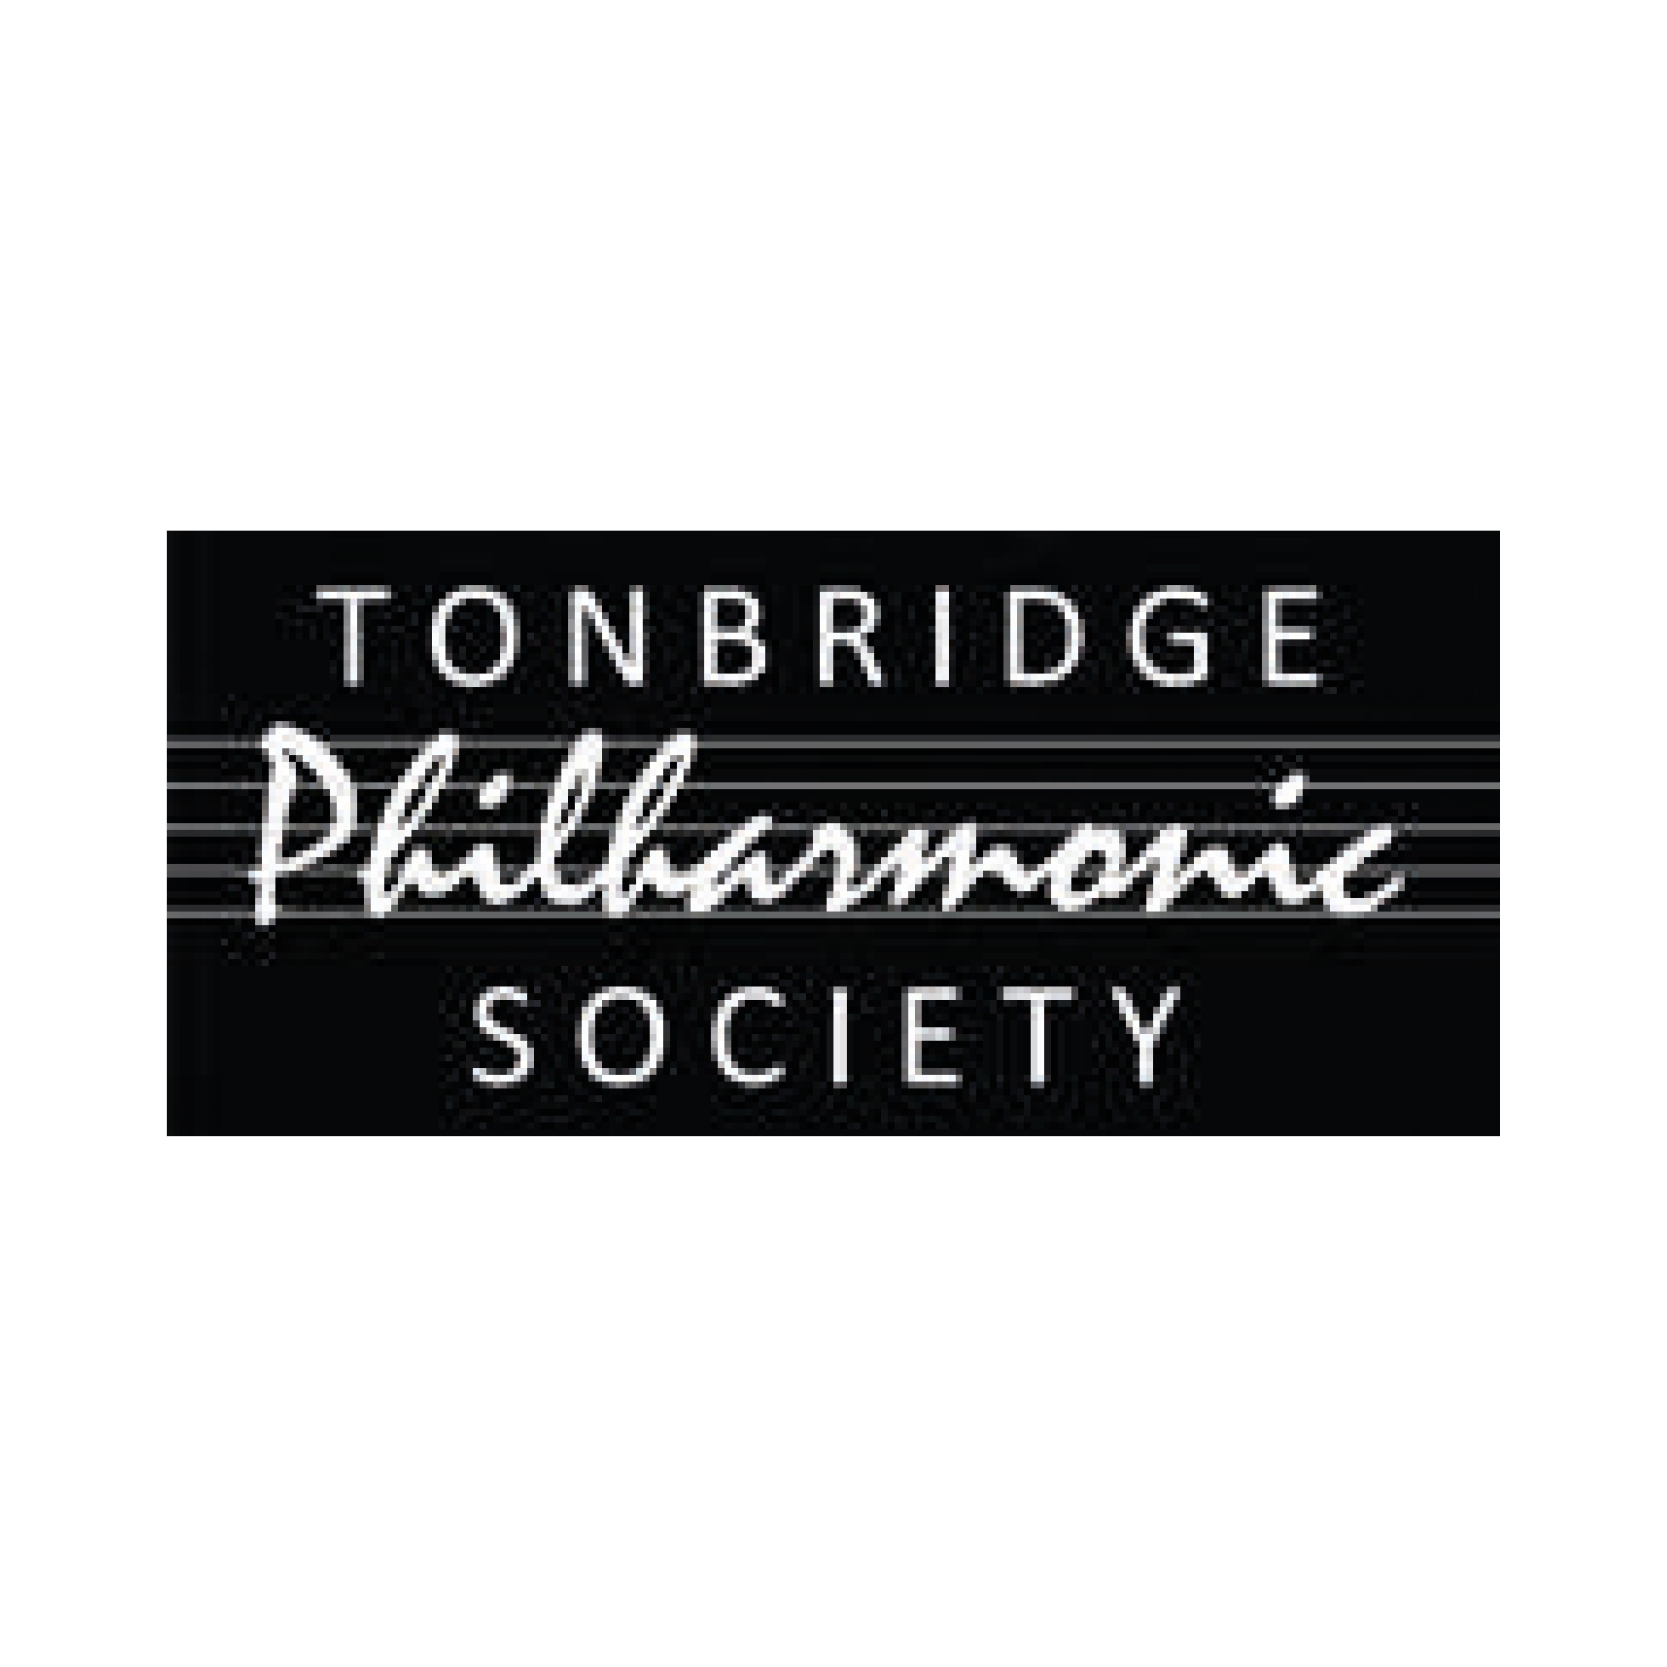 Tonbridge Phillamonic Society